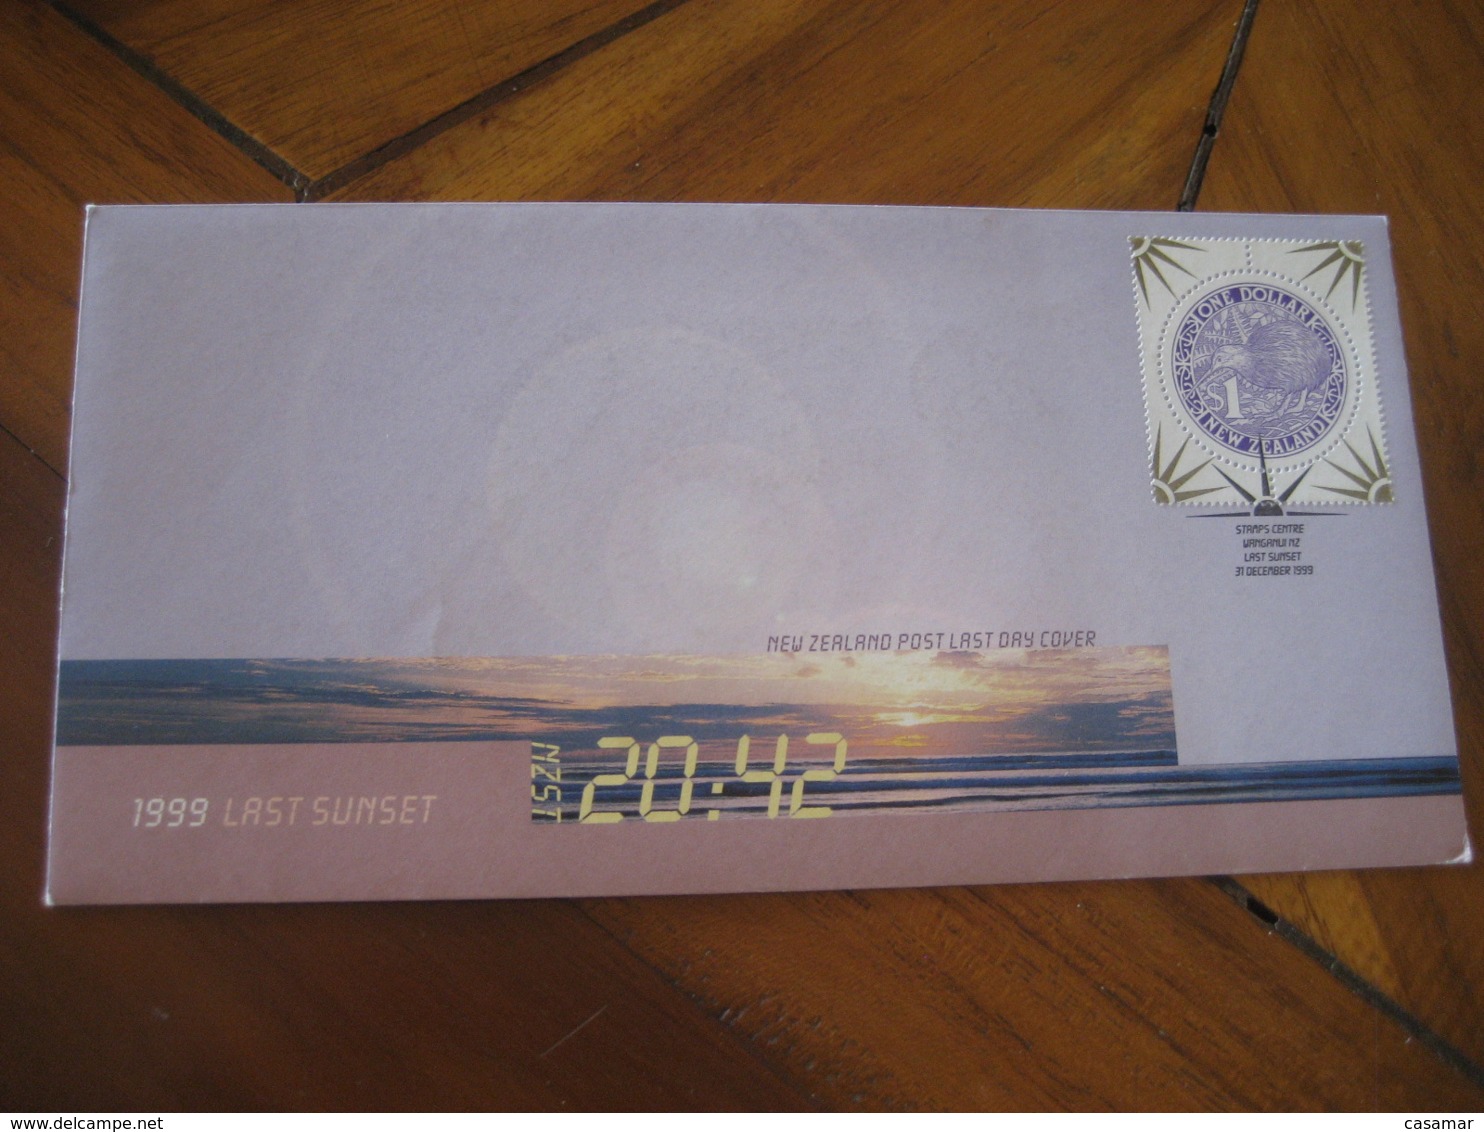 WANGANUI 1999 Meteorology Space Spatial LAST SUNSET 20:42 Invercargill Cancel Postal Stationery Cover NEW ZEALAND - Briefe U. Dokumente